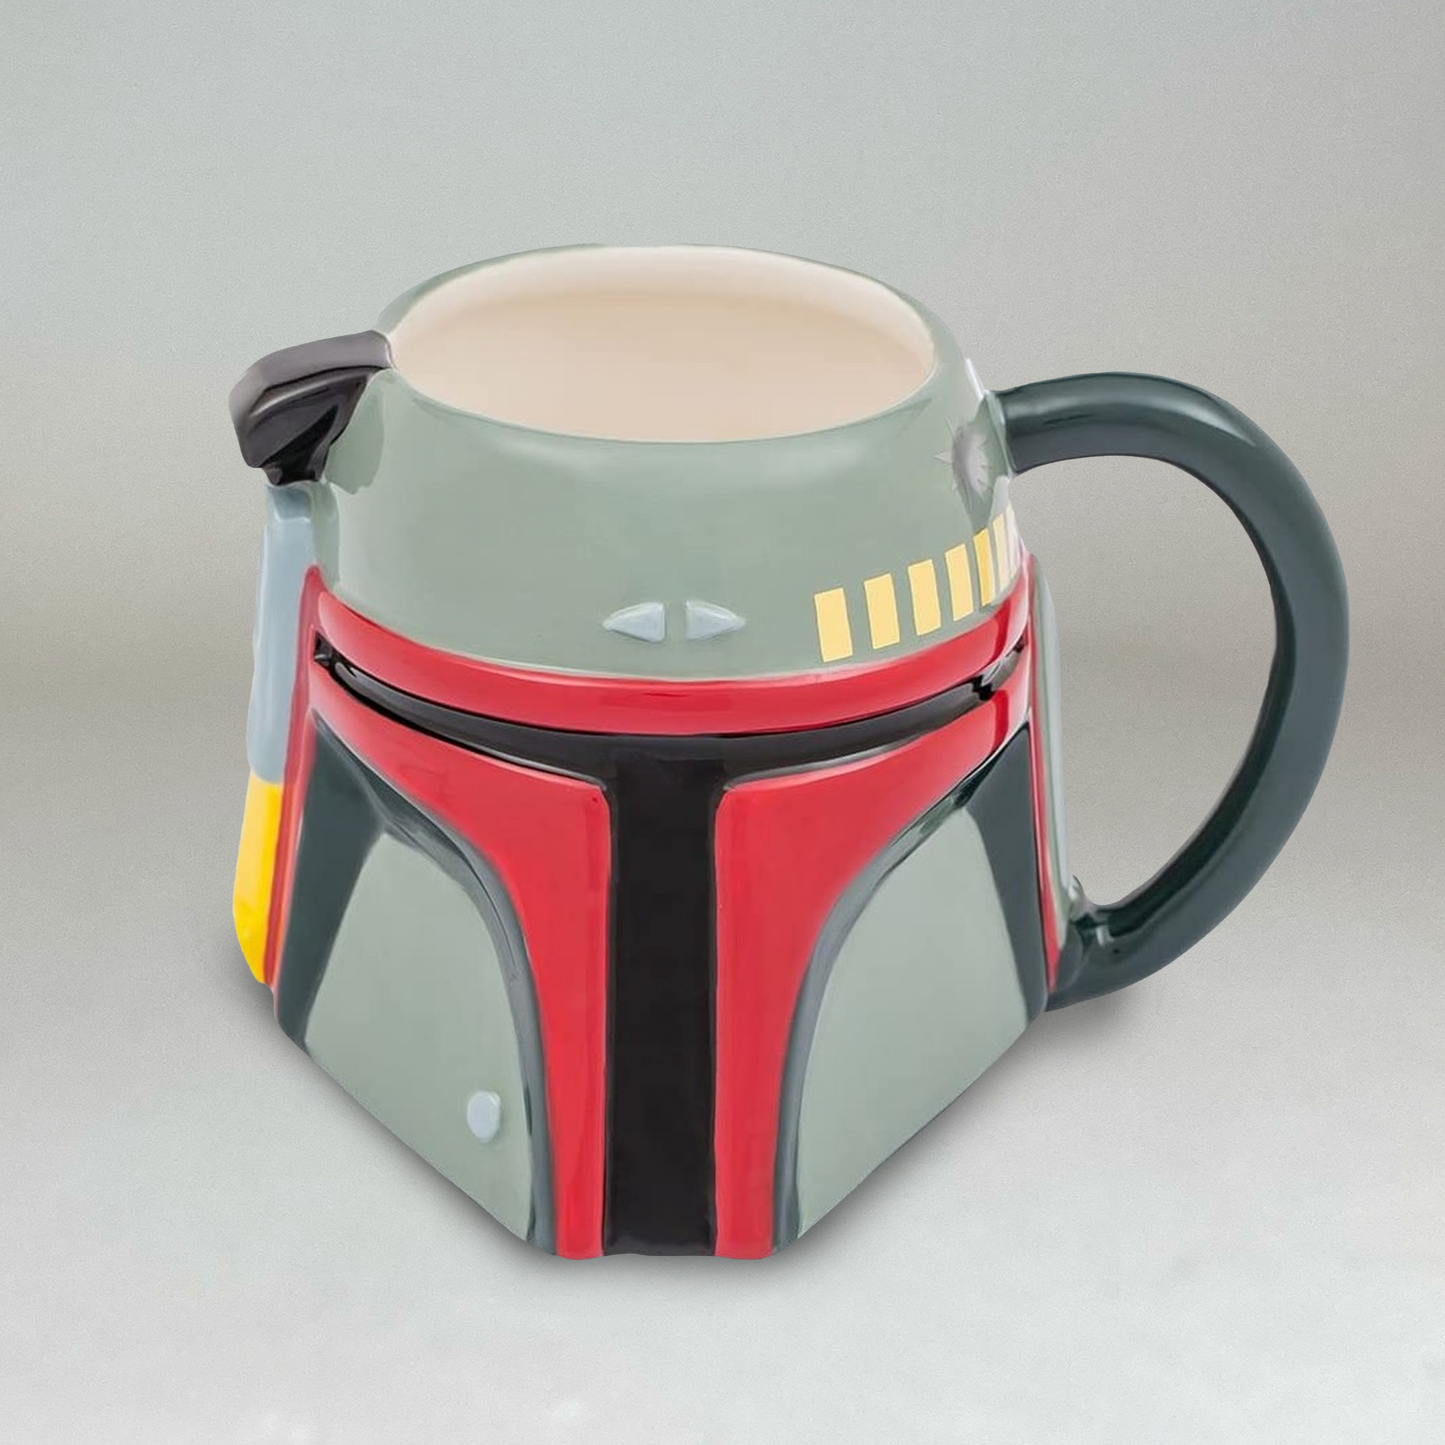 Mug Star Wars - Boba Fett